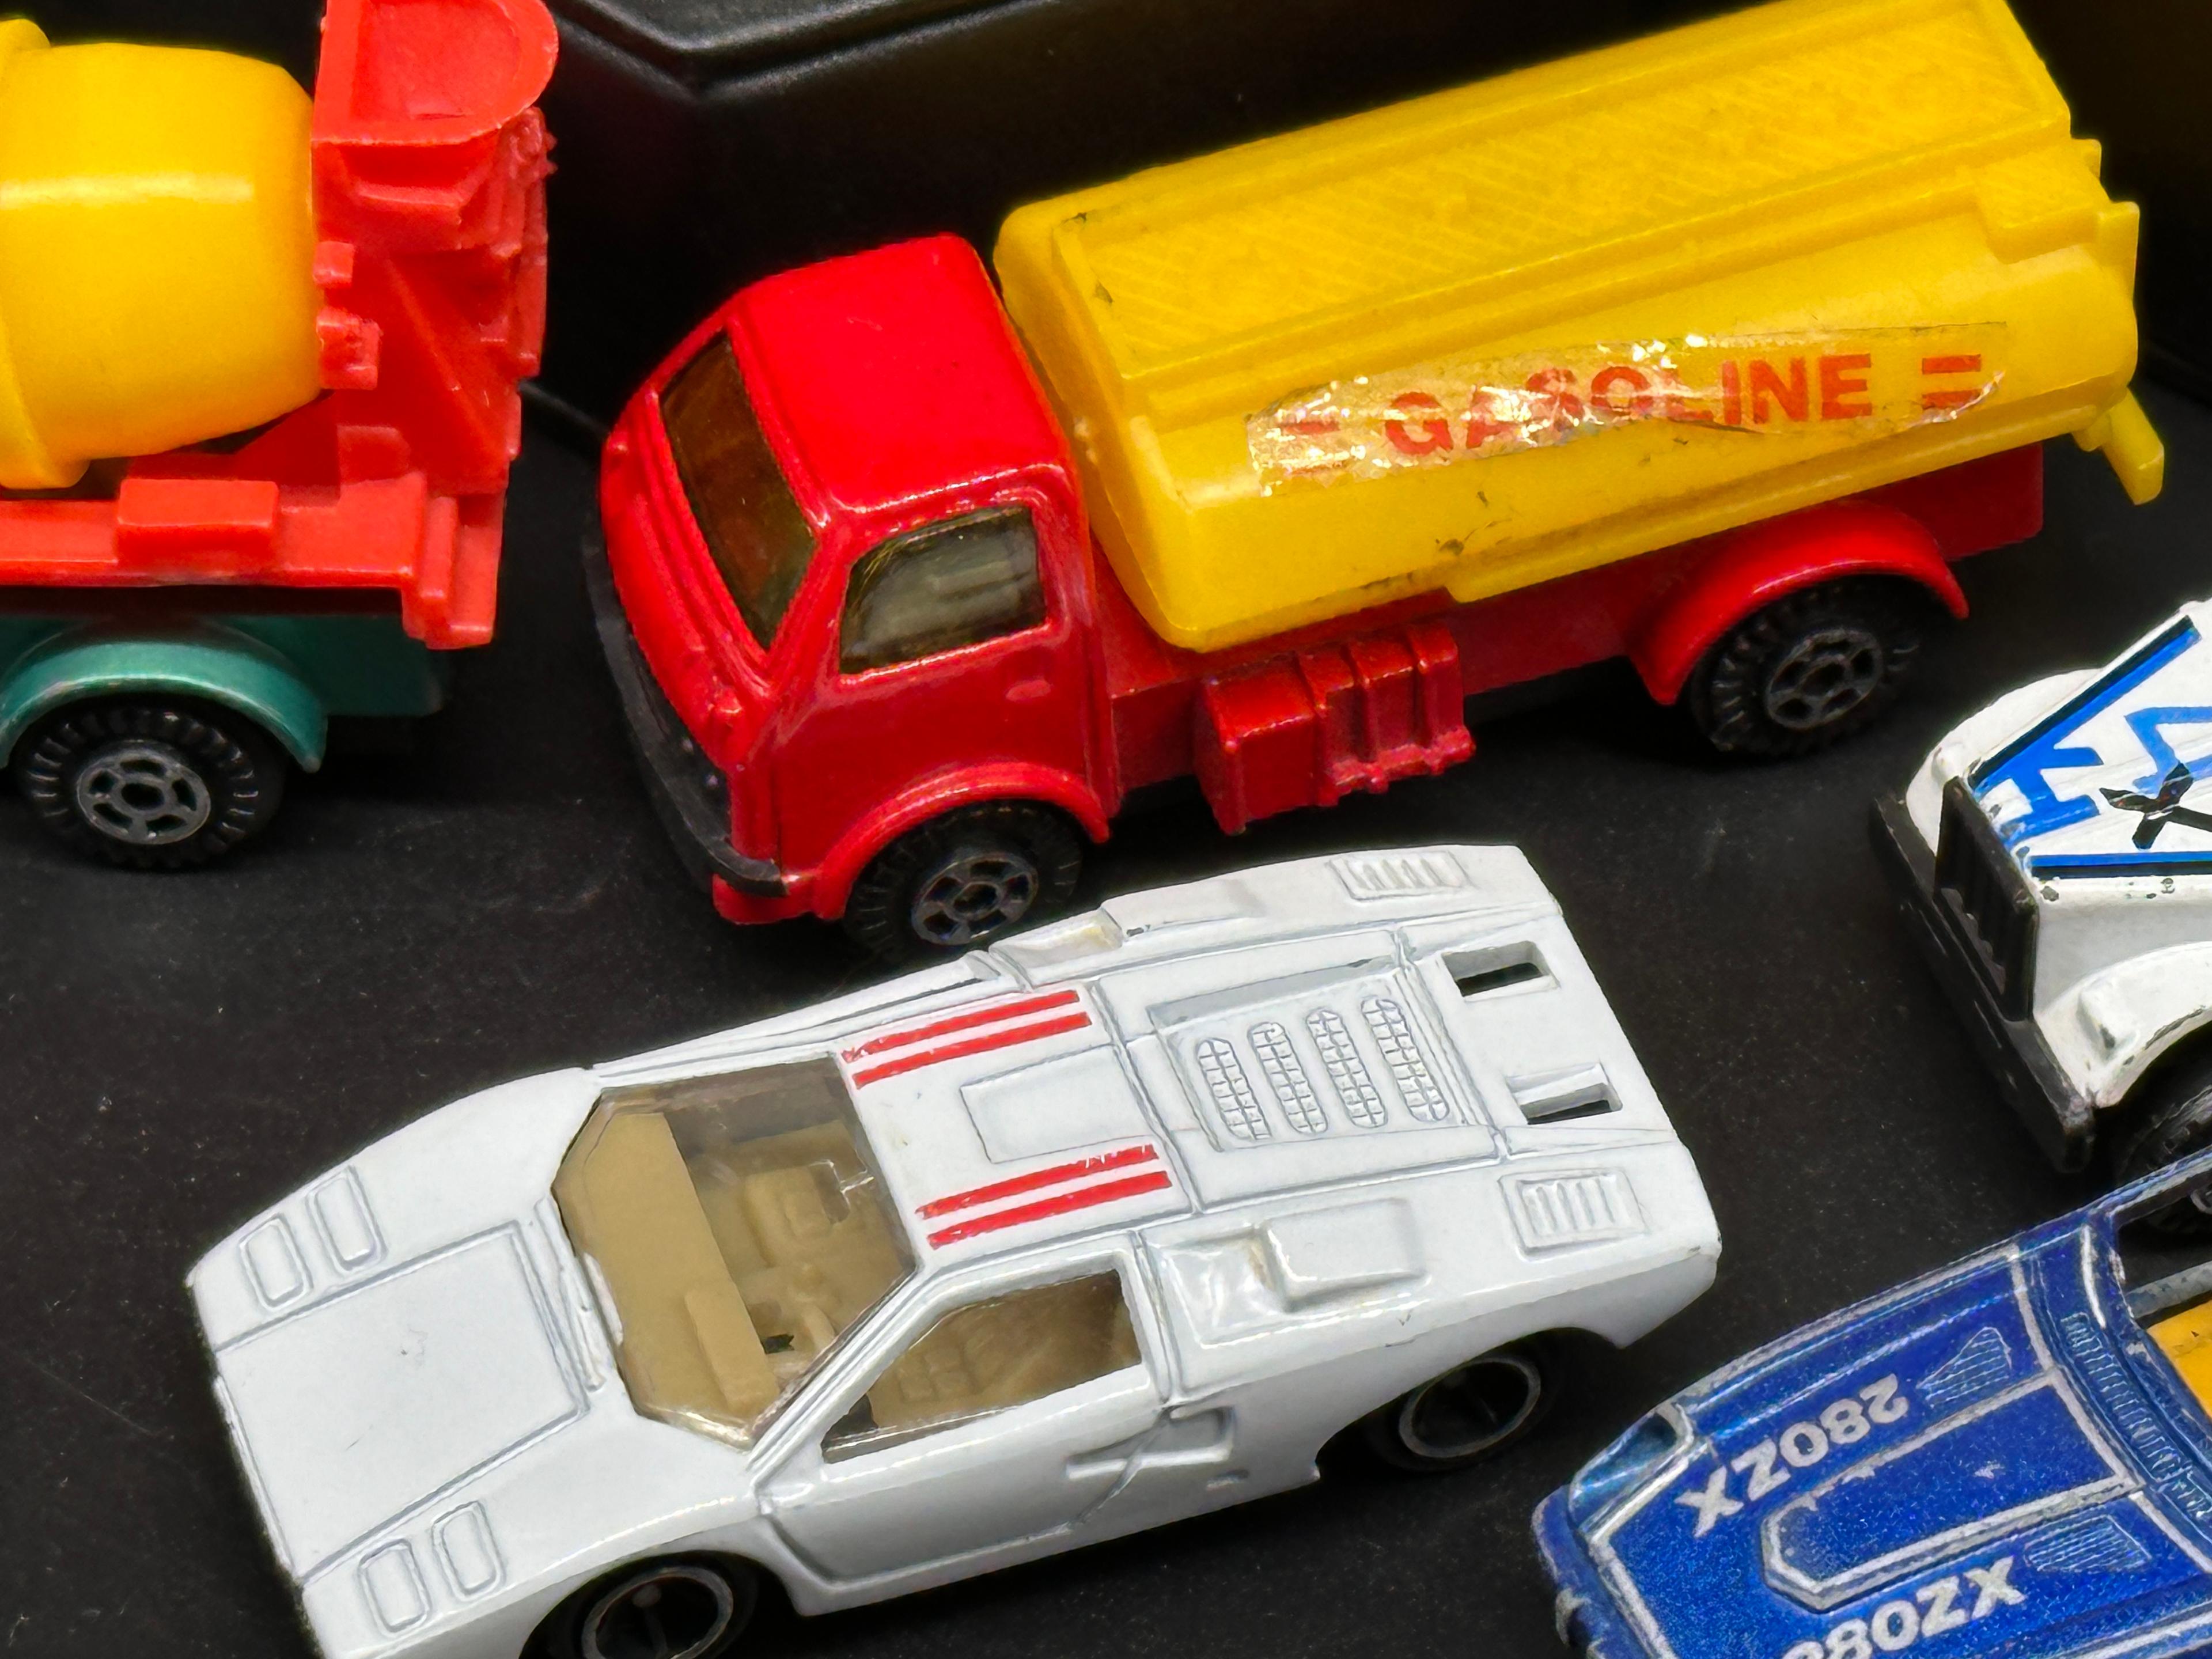 Assortment of Mini Diecast Cars